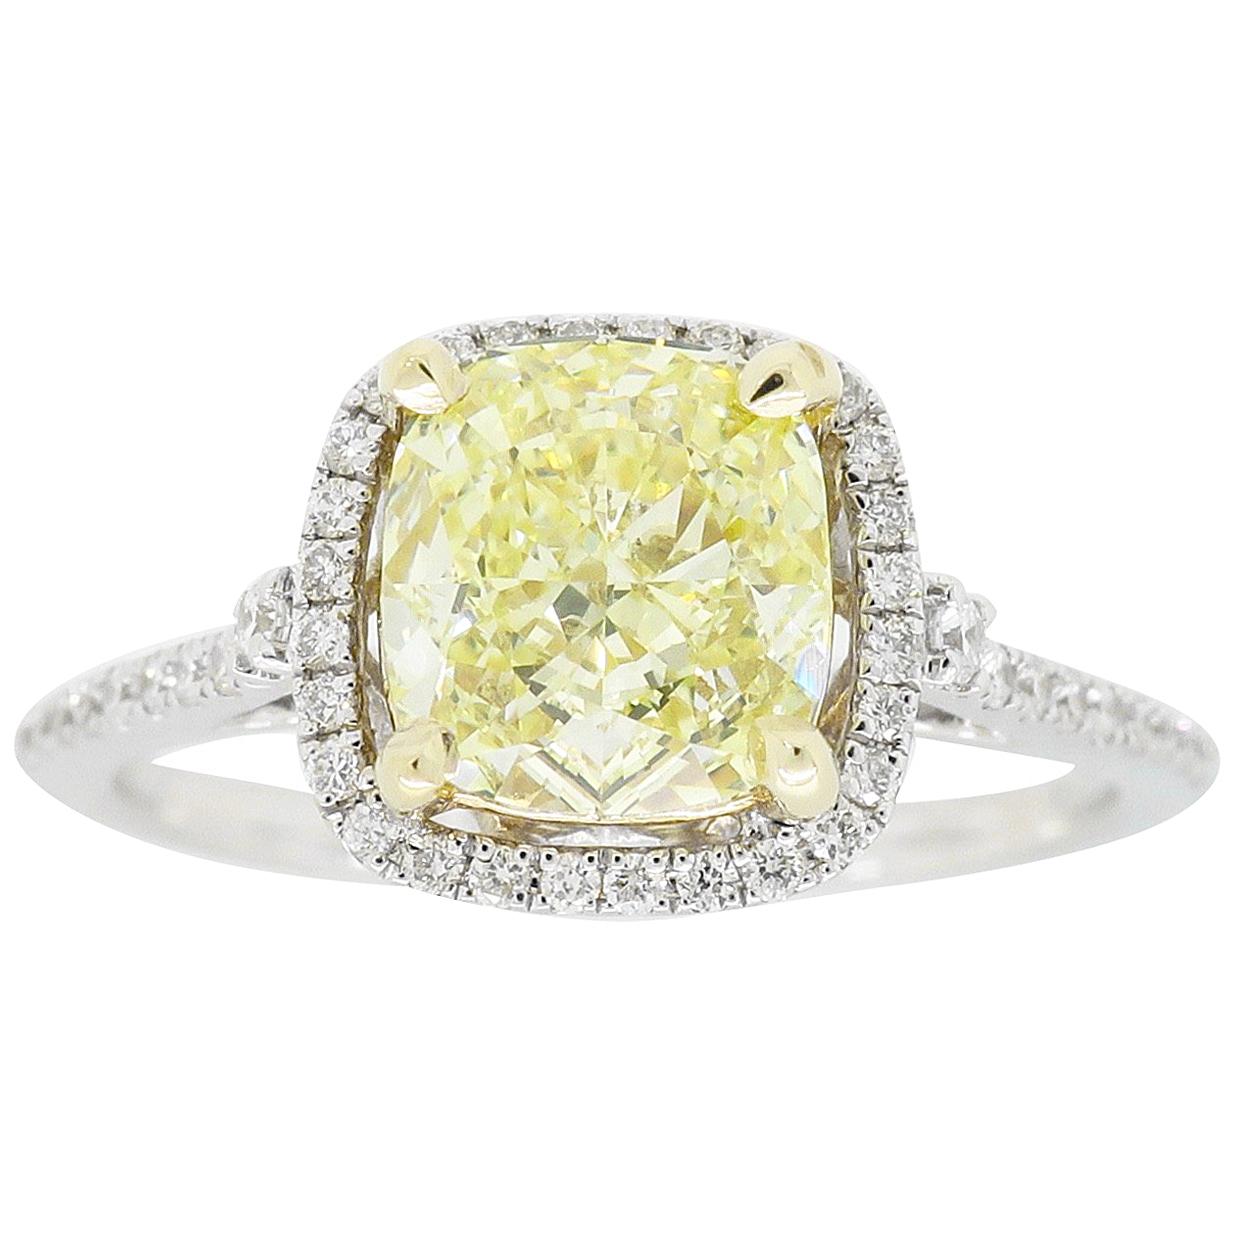 GIA Certified 1.64 Carat Fancy Yellow Diamond Halo Engagement Ring